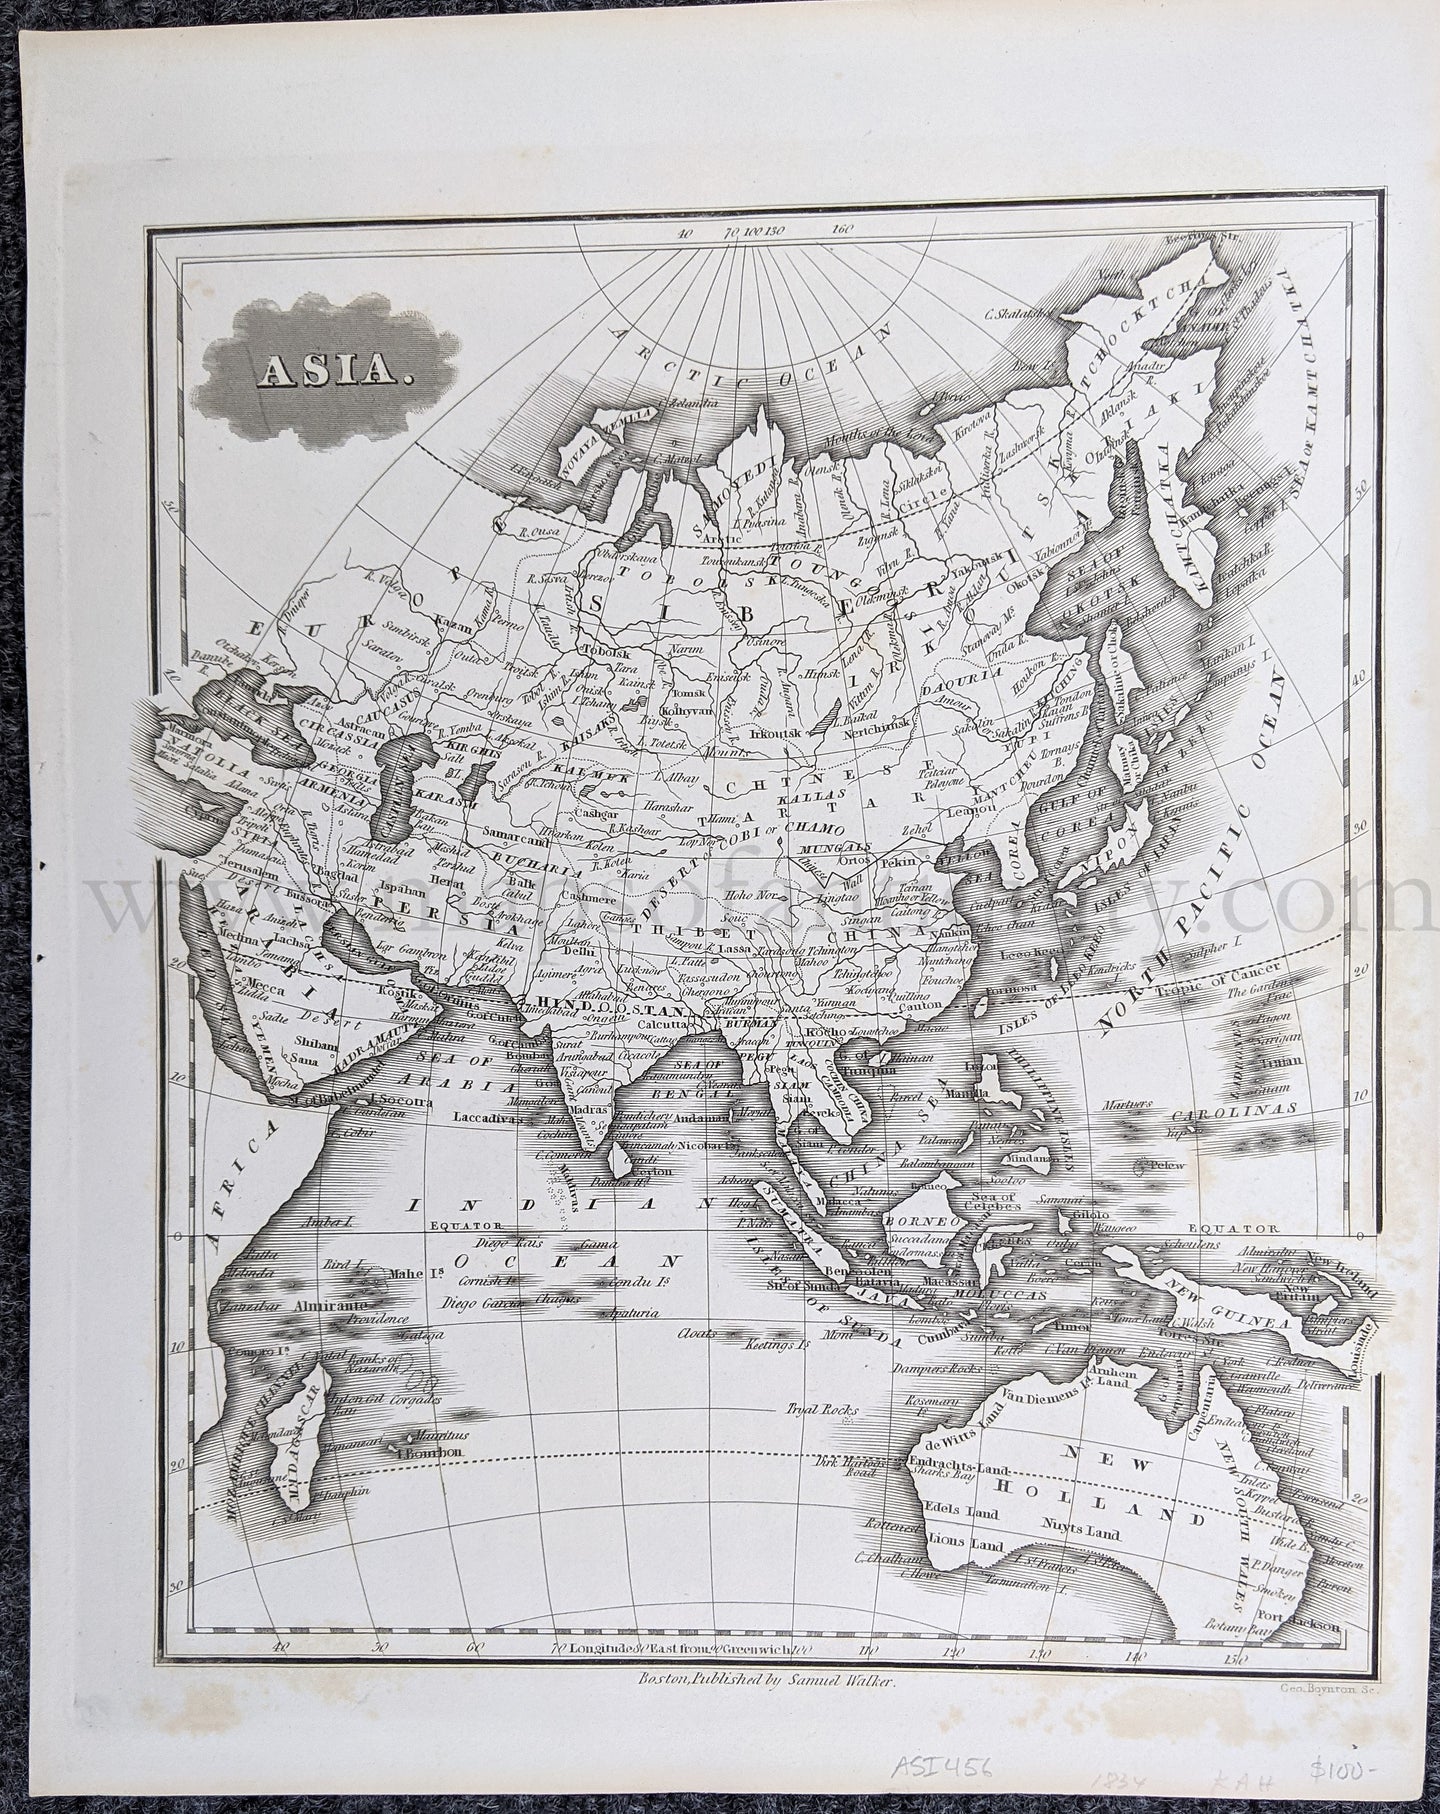 Genuine-Antique-Map-Asia.-Asia--1834-Samuel-Walker-Maps-Of-Antiquity-1800s-19th-century